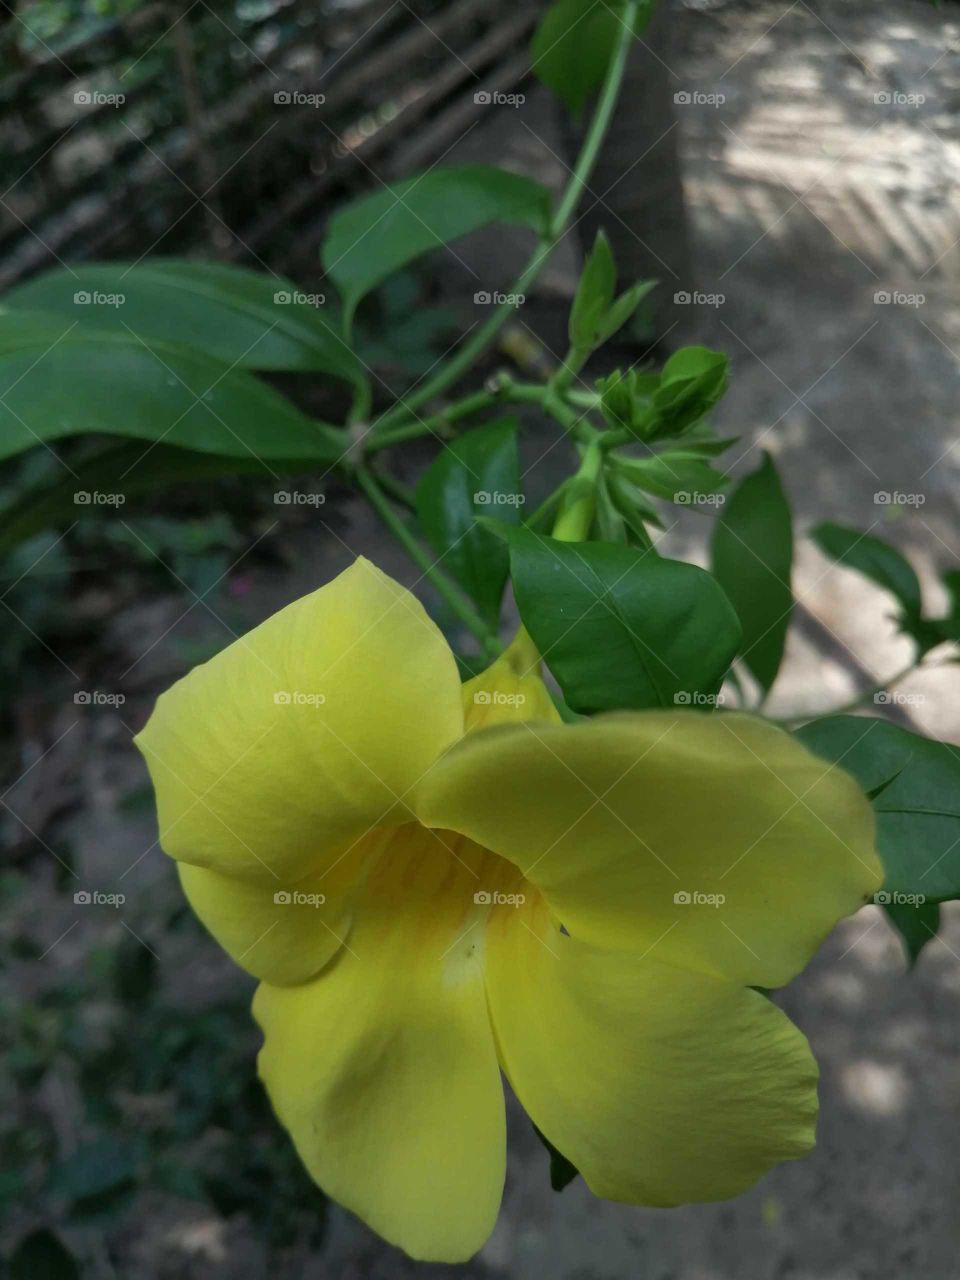 It's beautifully yellow flower